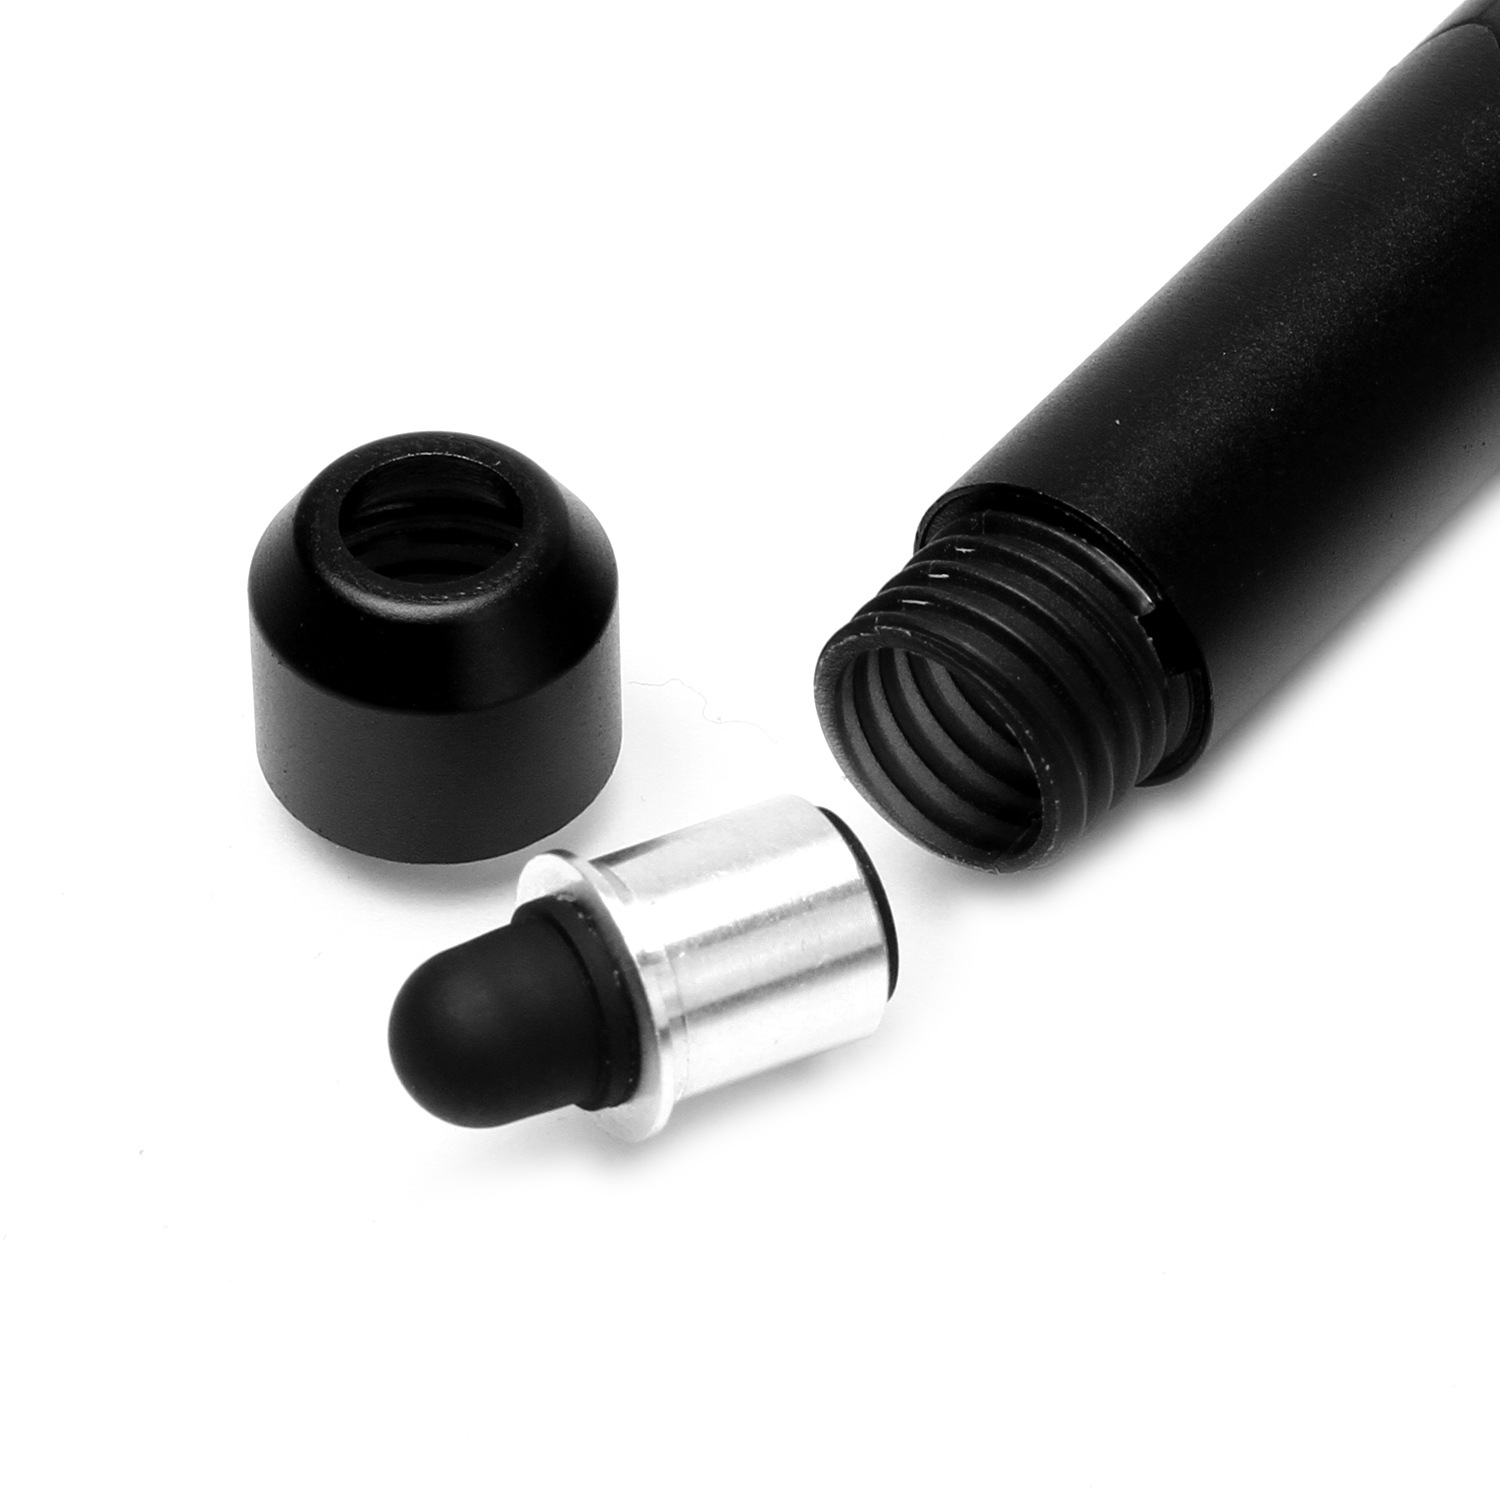 VIBOTON-3-in-1--Flip-Pen-Touch-sensitive-Pen-Red-Light-Indication-Wireless-Presenter-PPT-Page-Pen-Cl-1553608-4